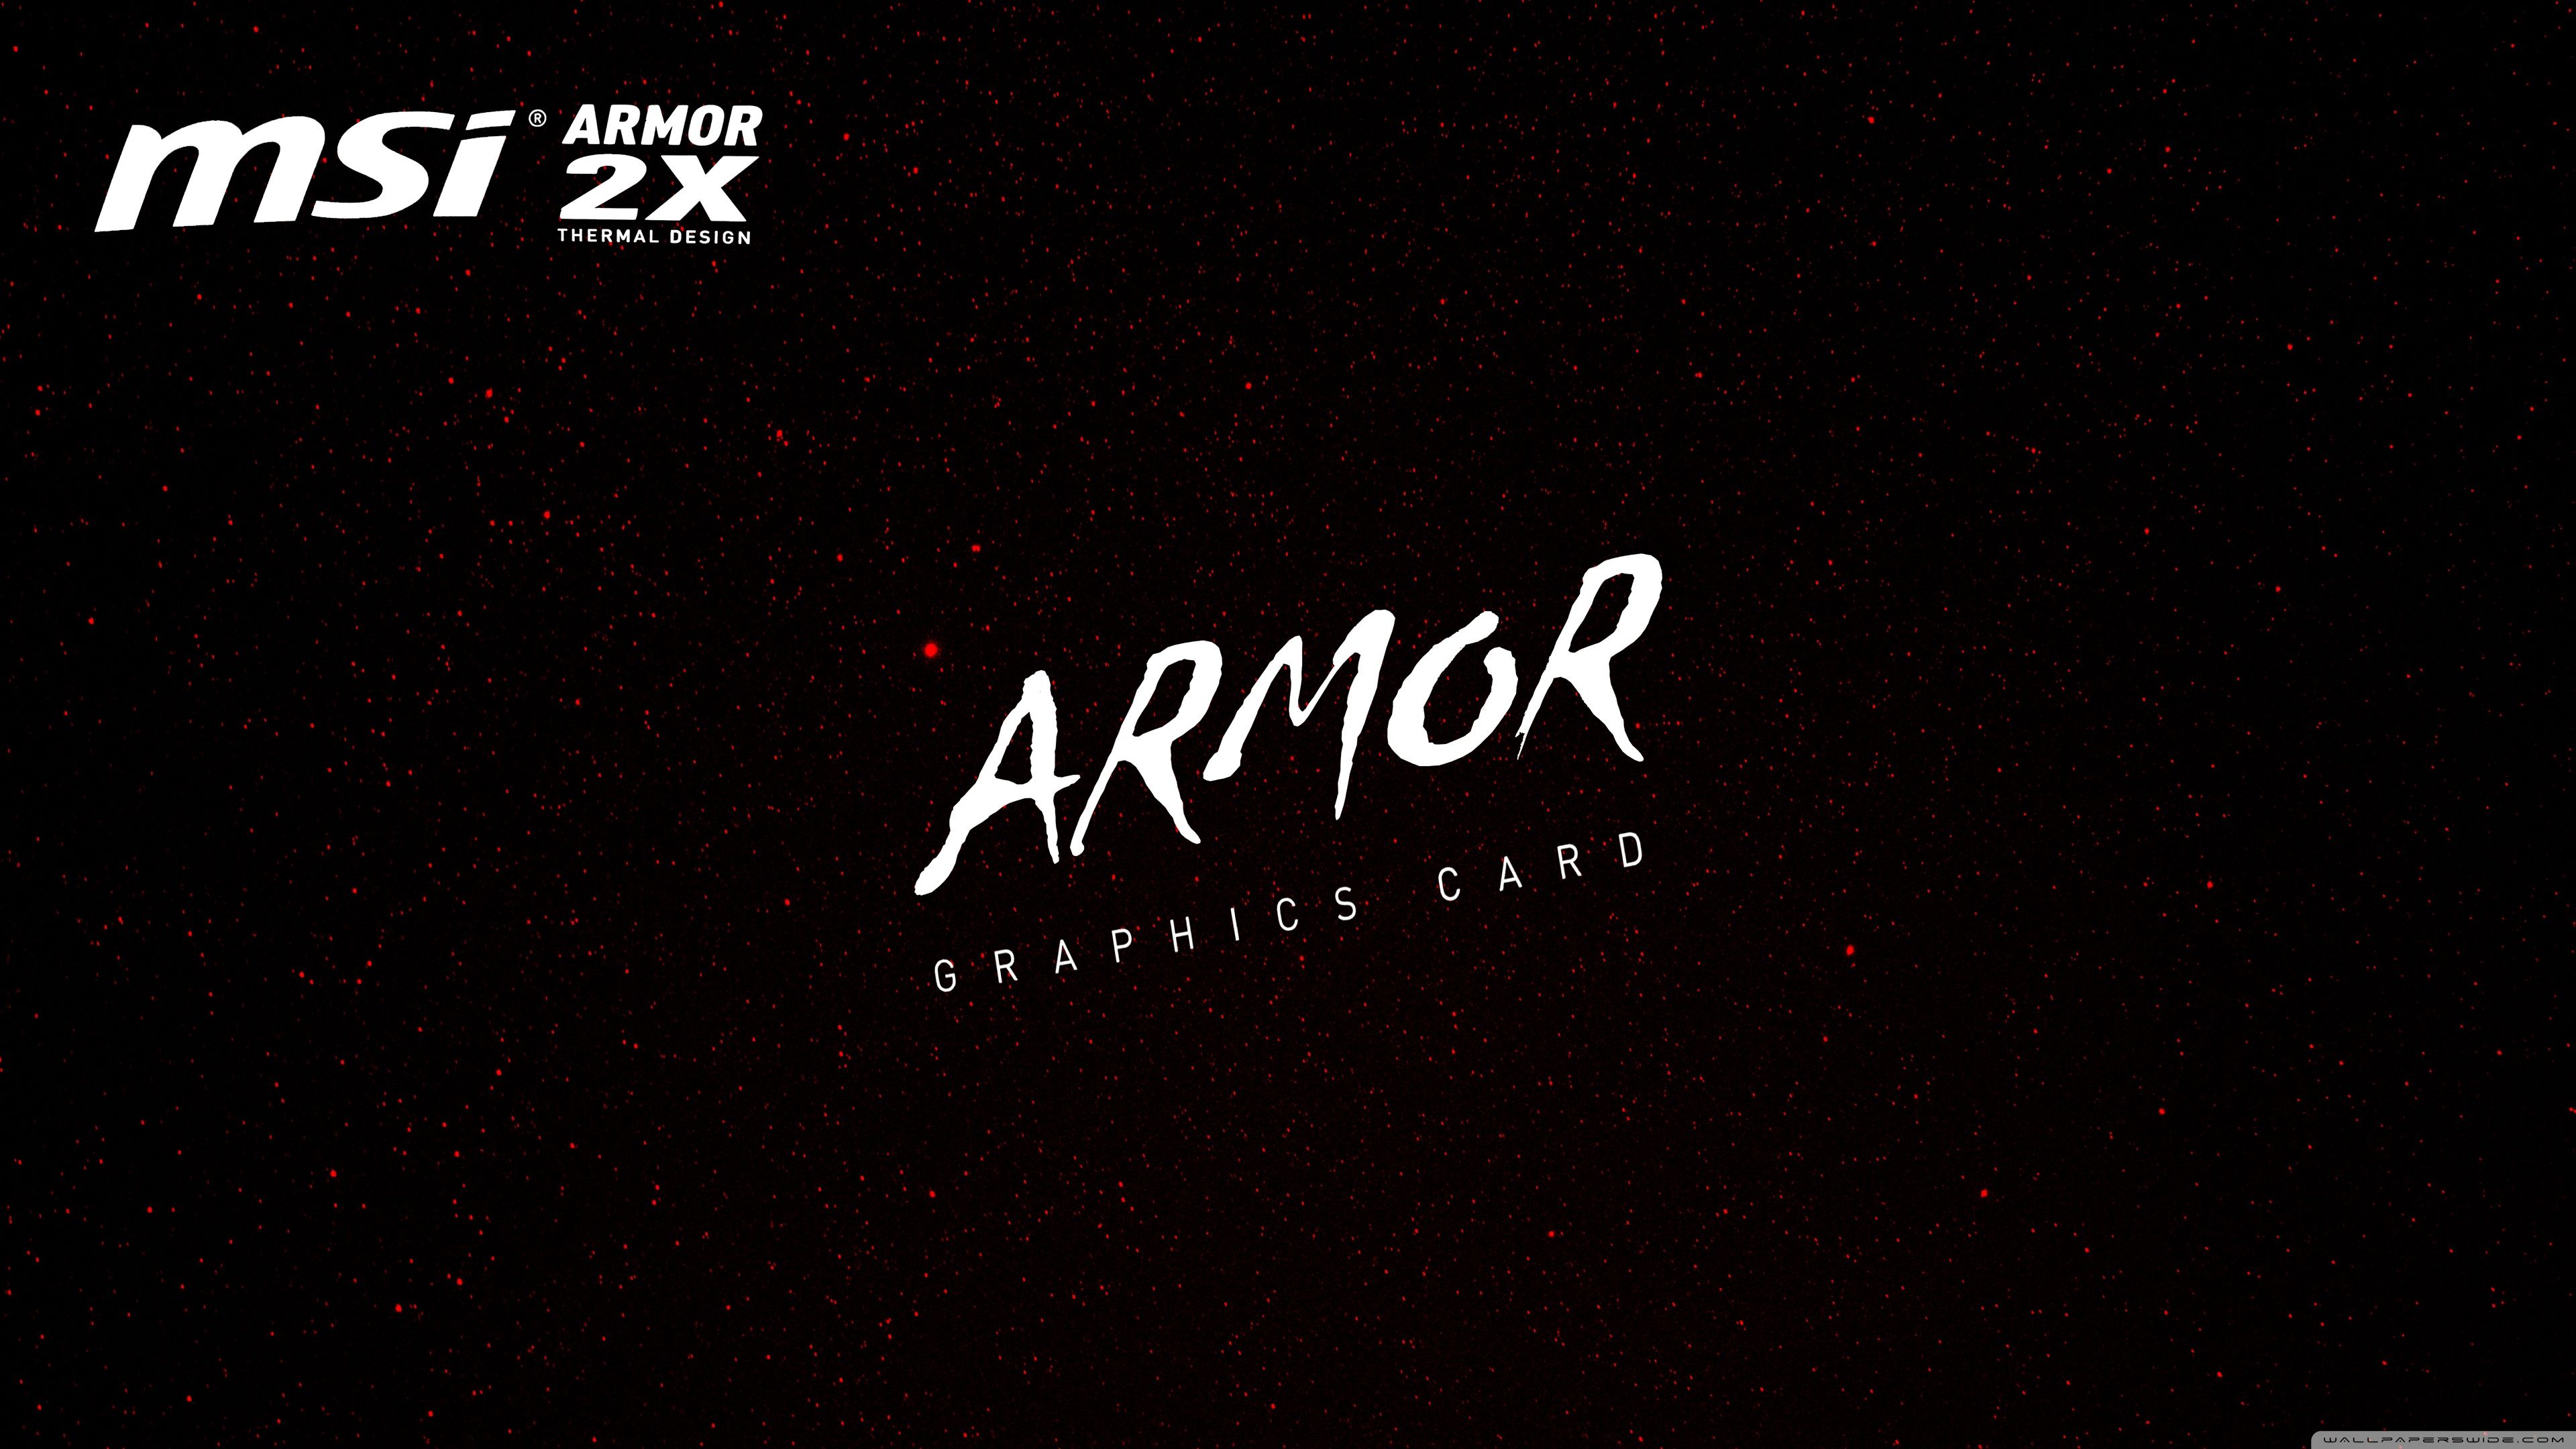 Msi Armor Graphics Card Ultra HD Desktop Background Wallpaper